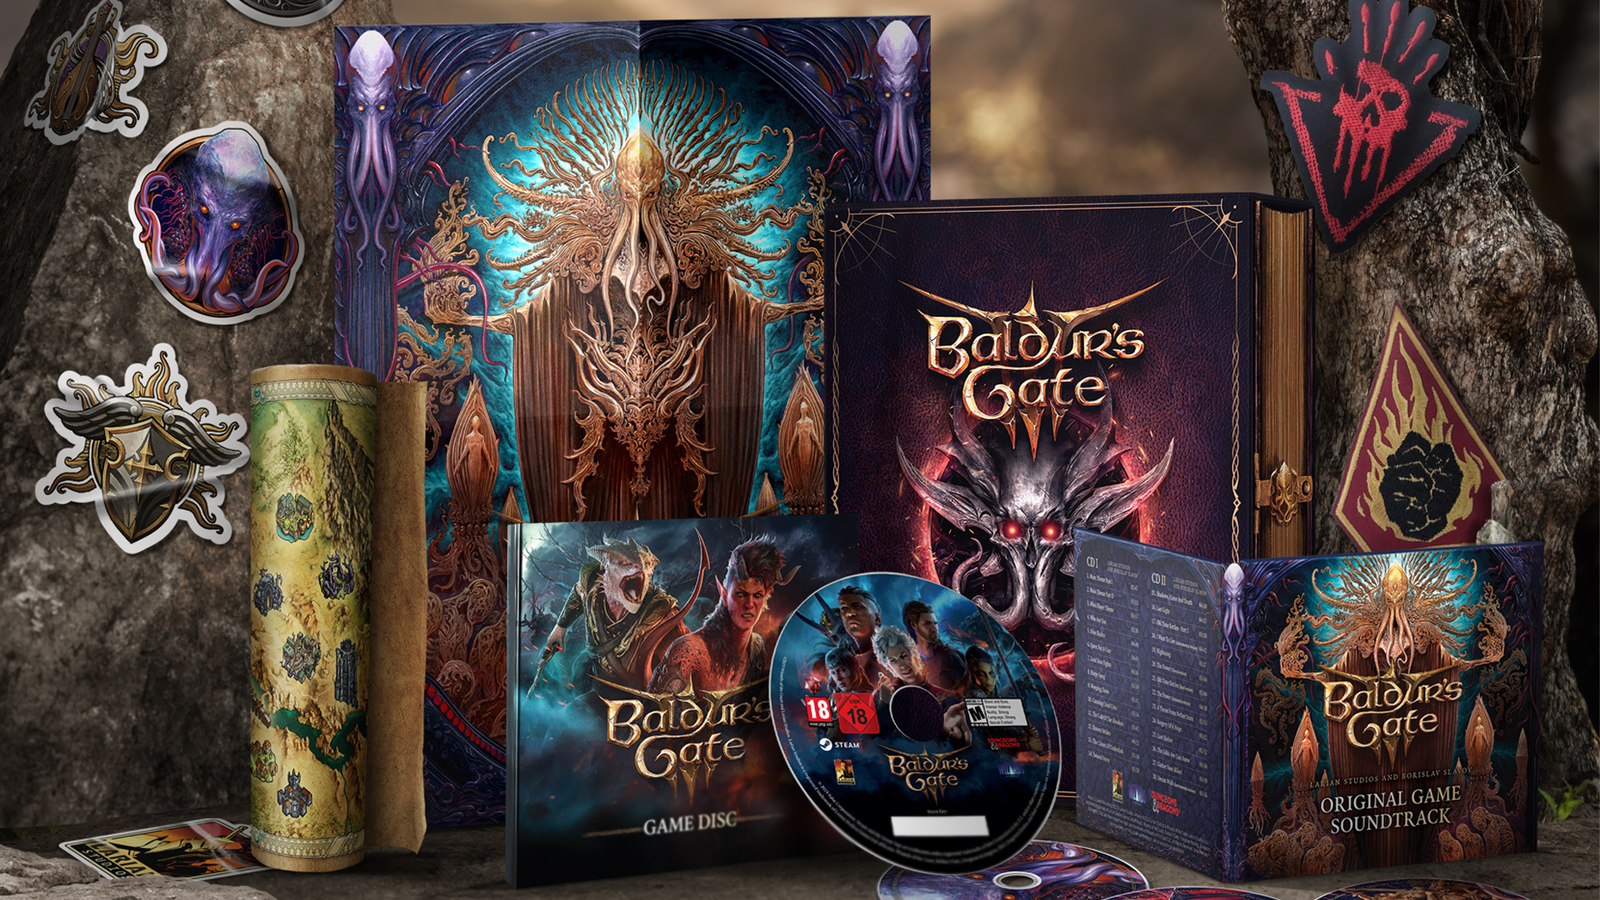 Baldur's Gate 3 early review: Modern fantasy